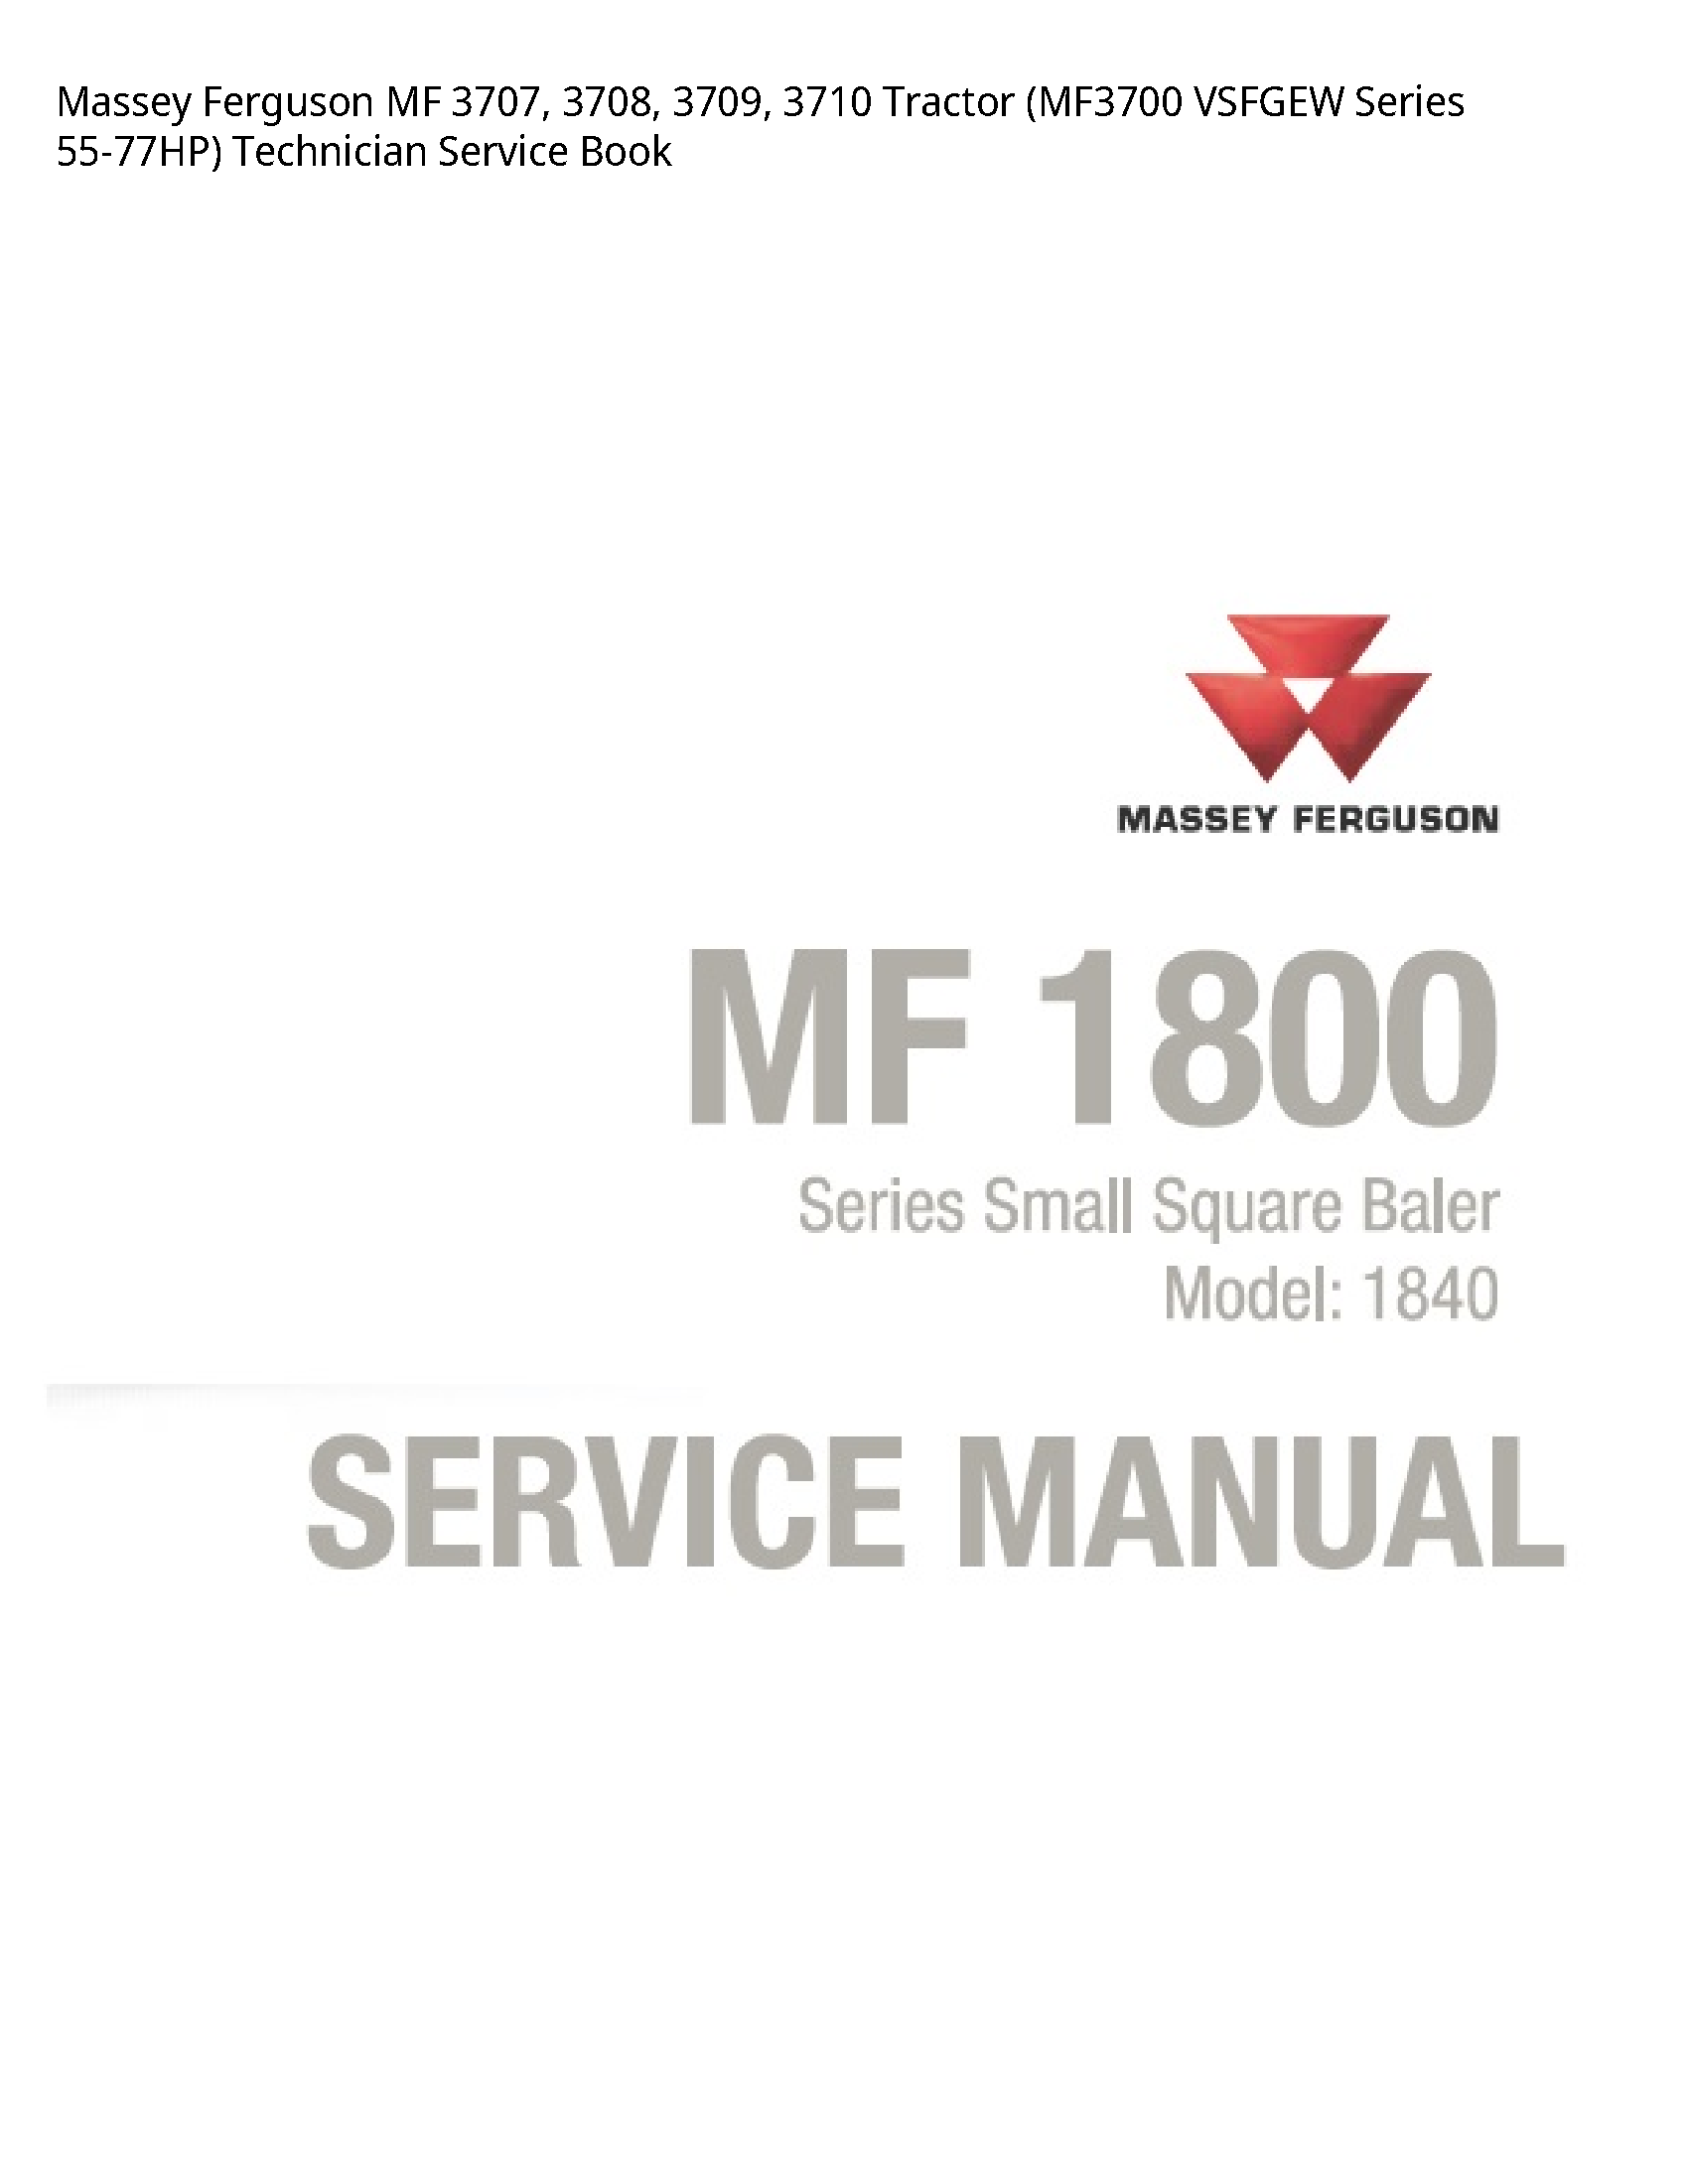 Massey Ferguson 3707 MF Tractor VSFGEW Series Technician Service Book manual